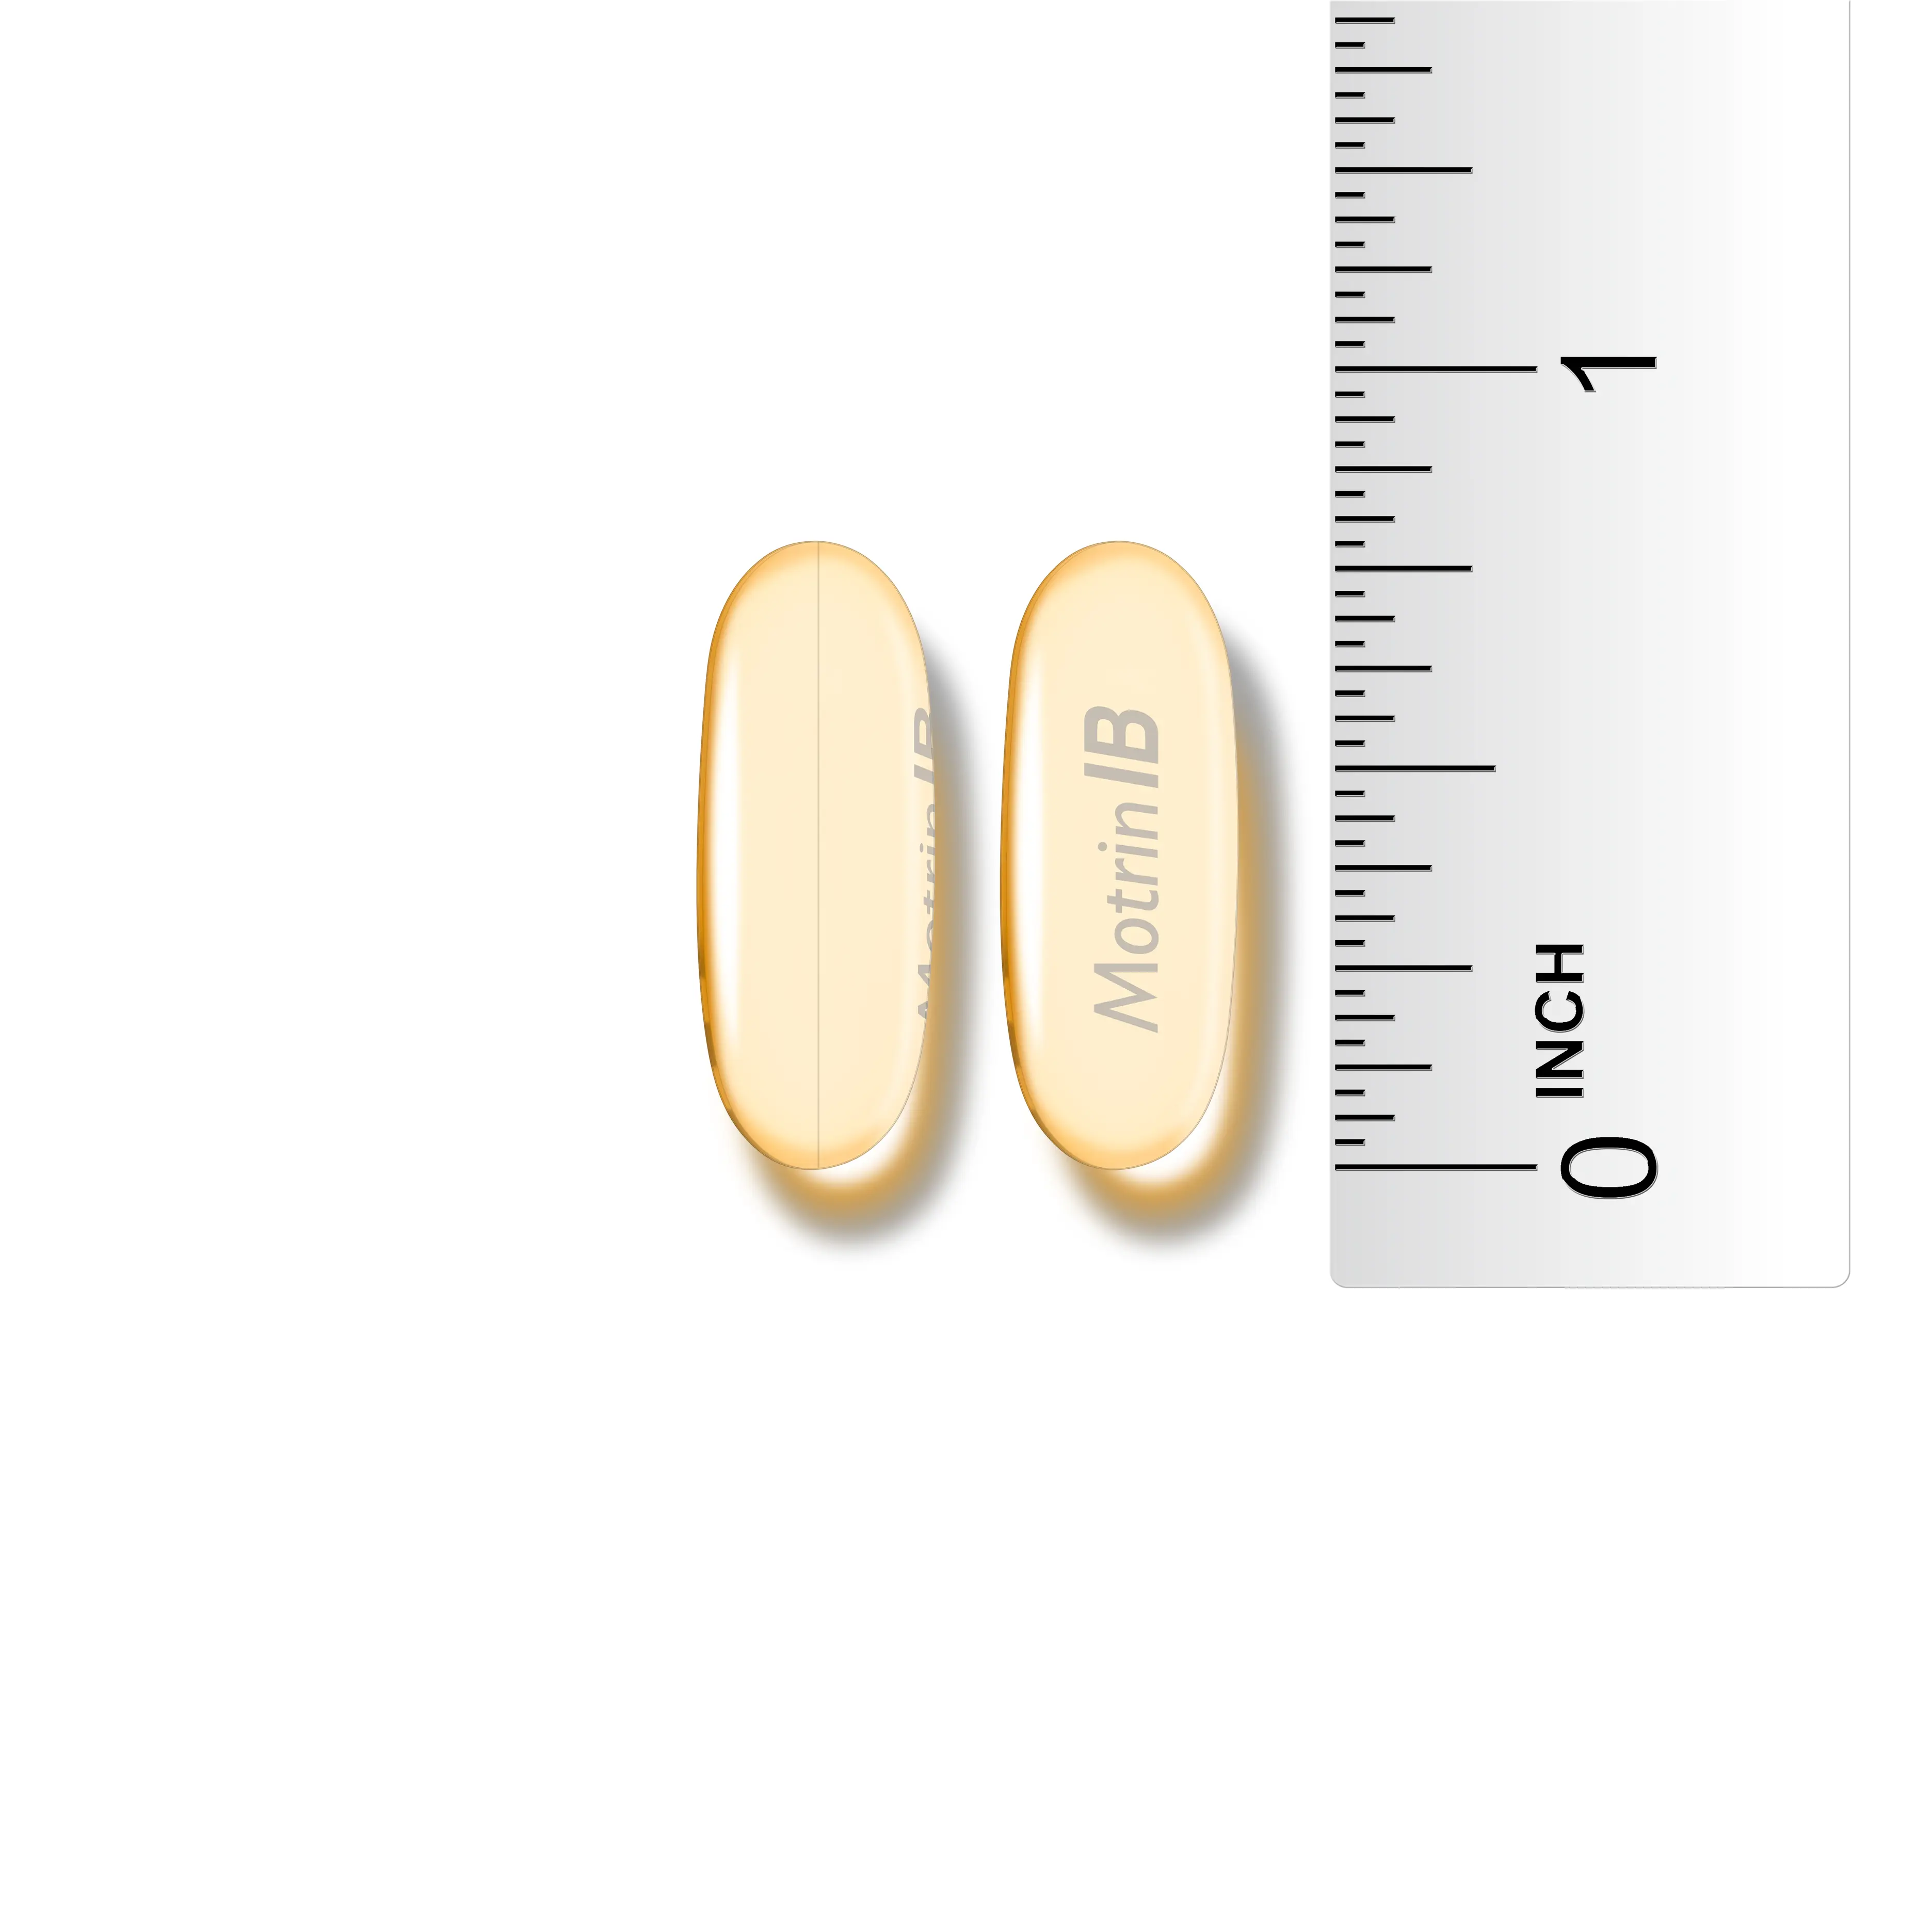 Motrin IB liquid gel size compared to ruler